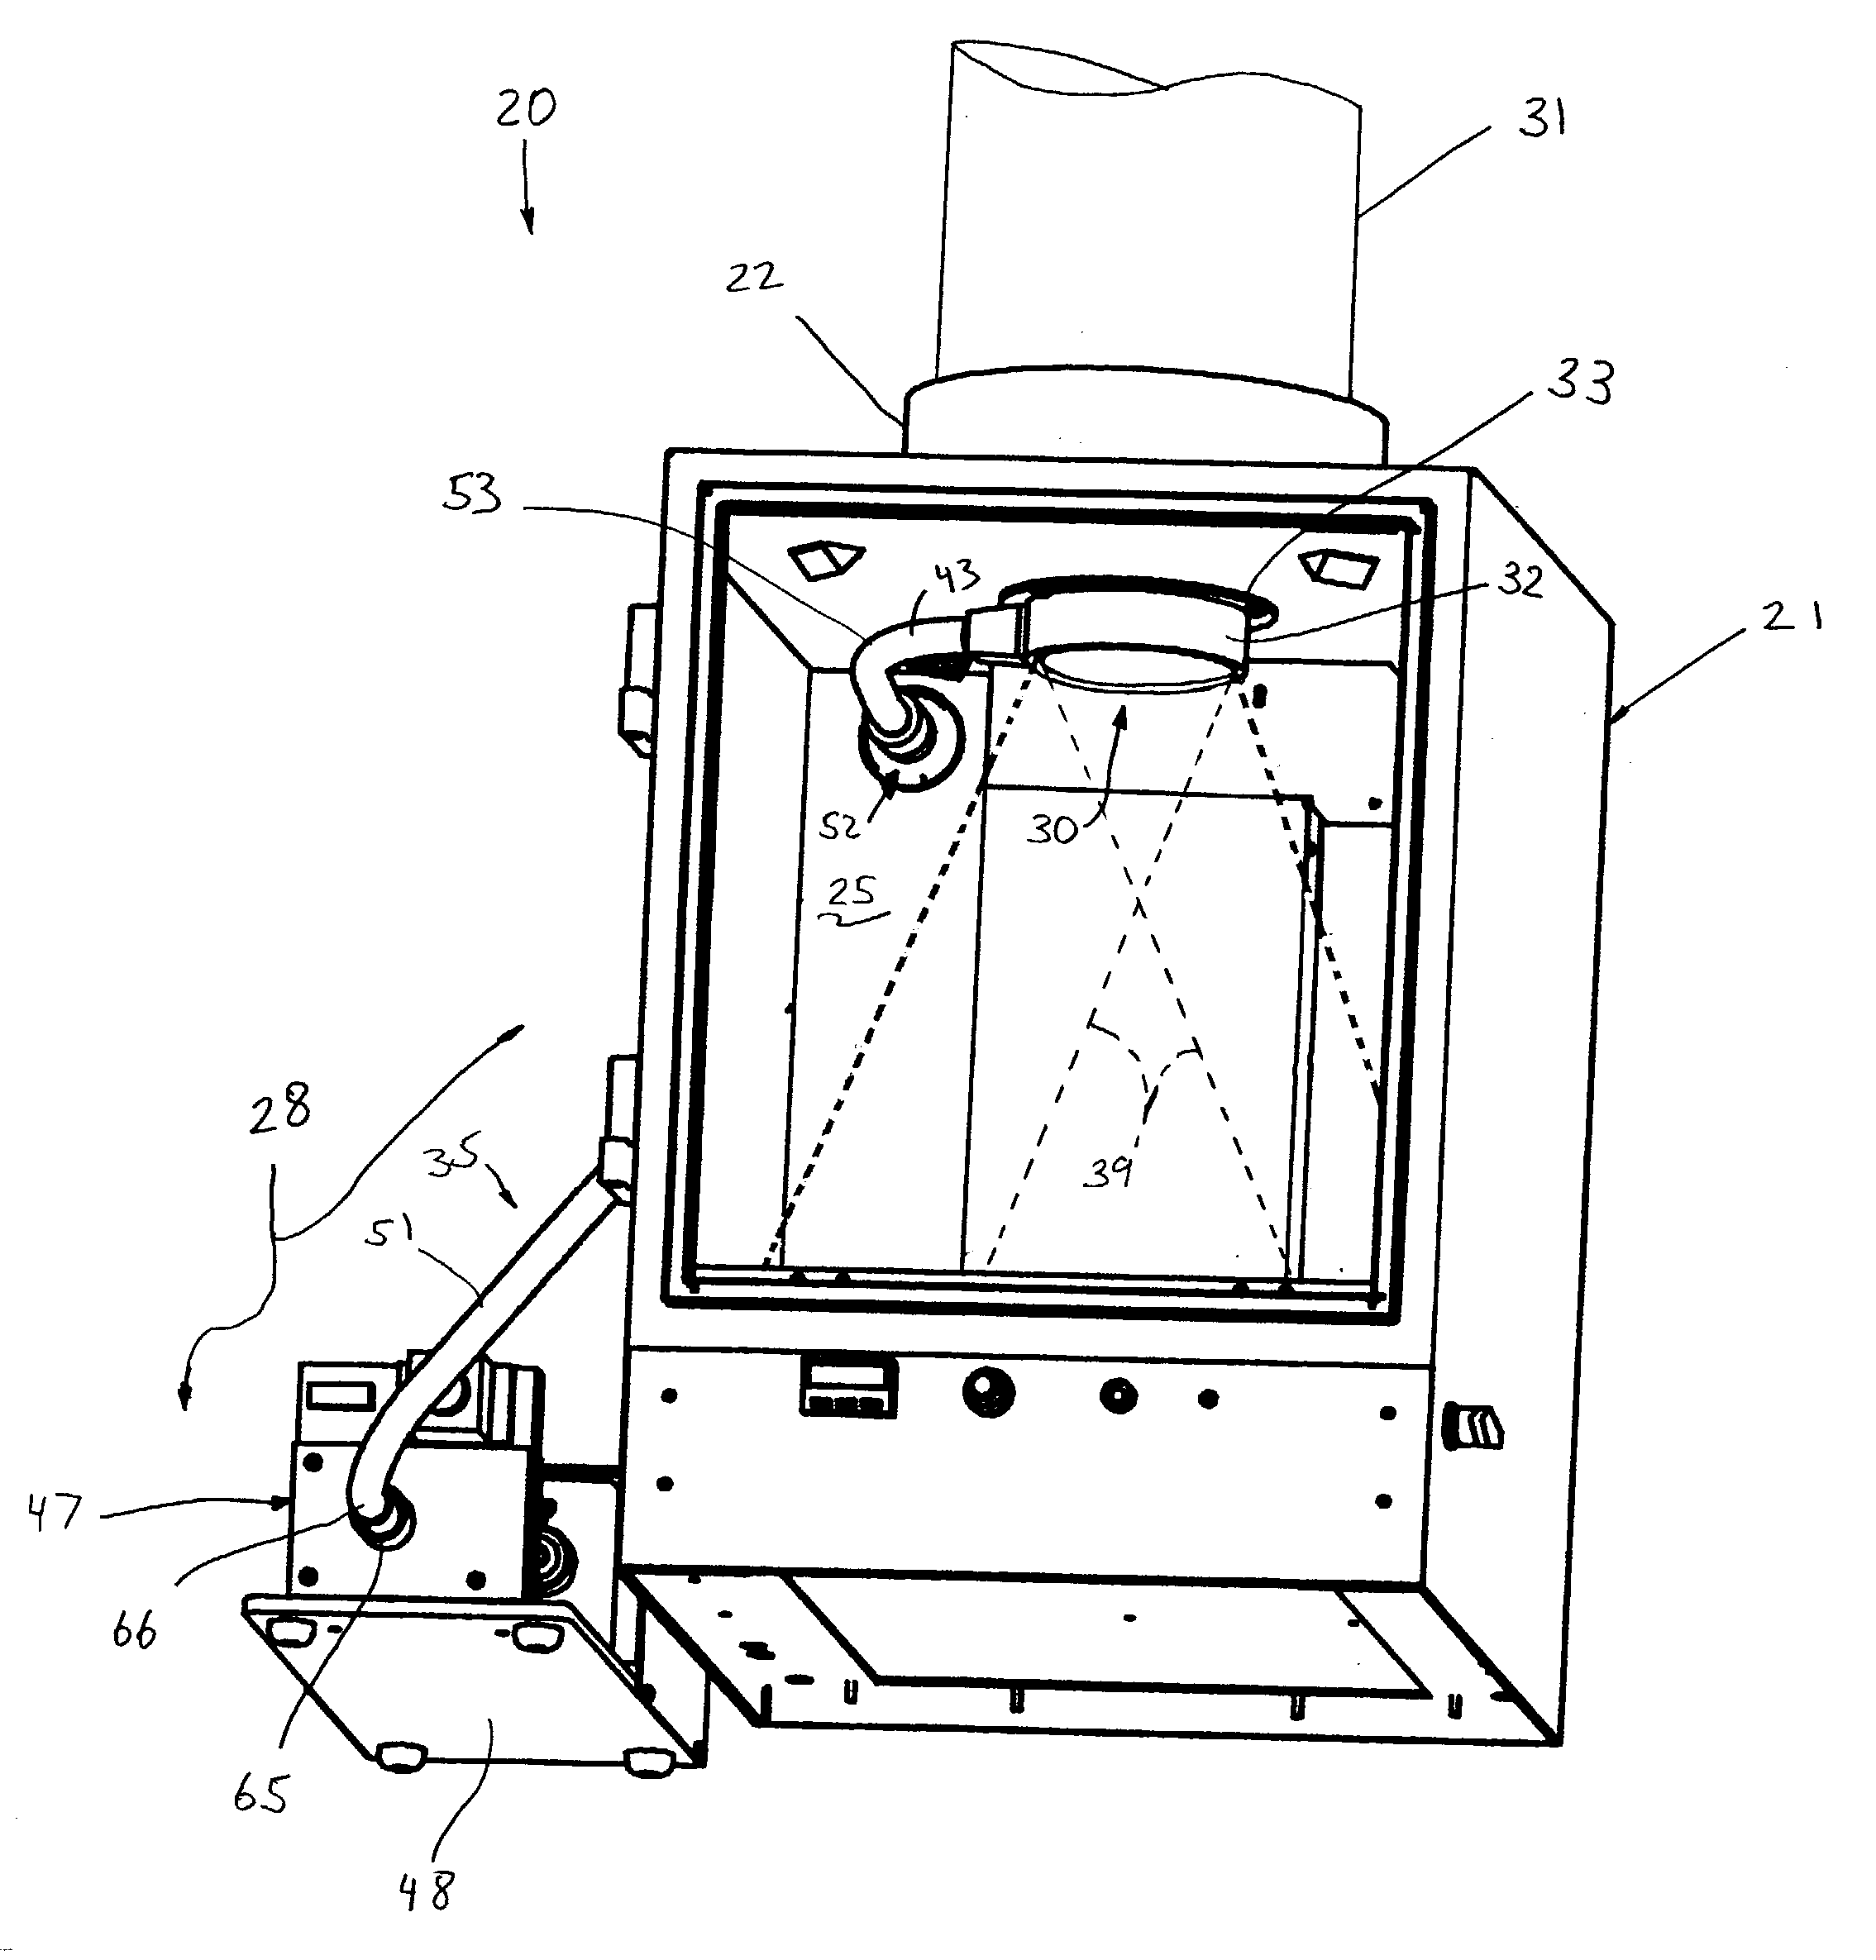 Bottom fluorescence illumination assembly for an imaging apparatus